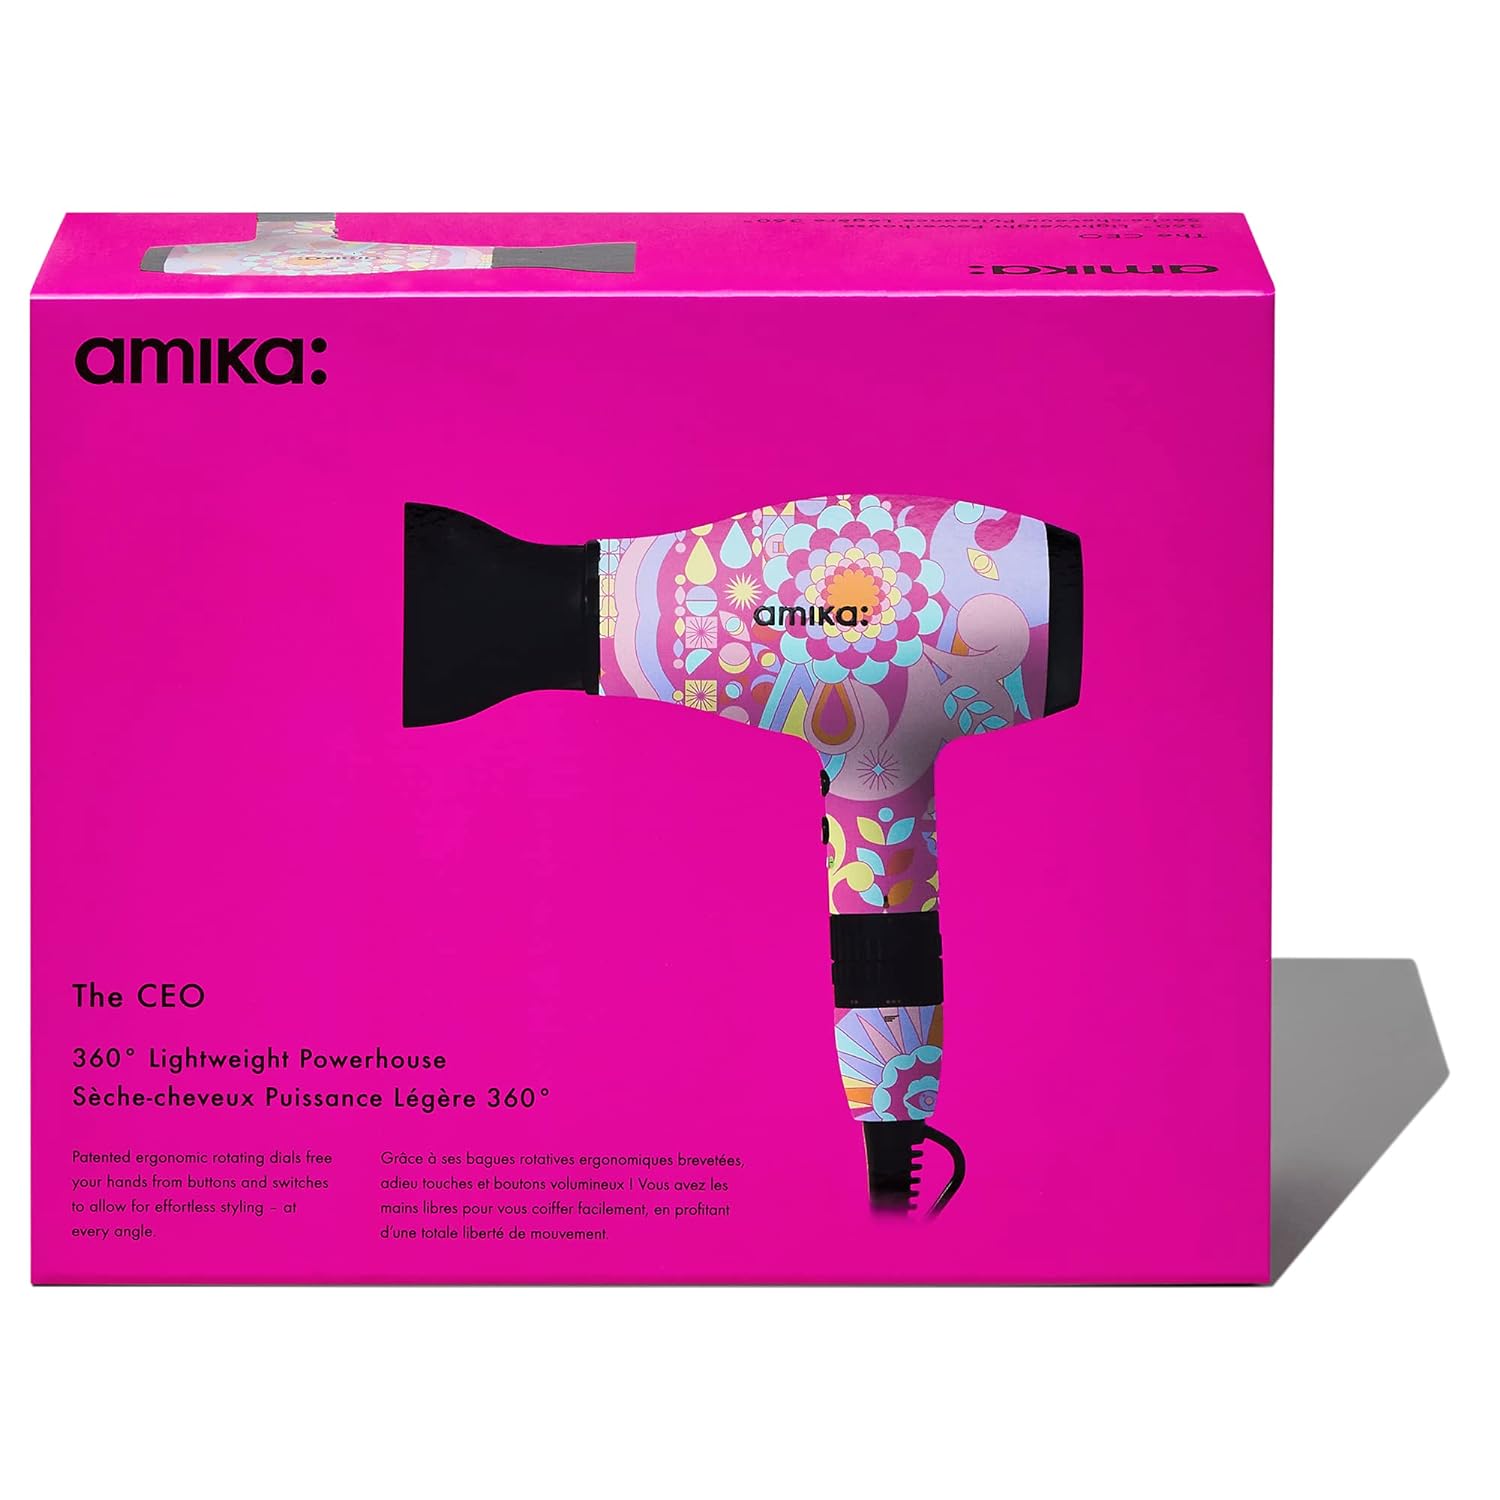 Amika The CEO 360° Lightweight Powerhouse Hair Dryer